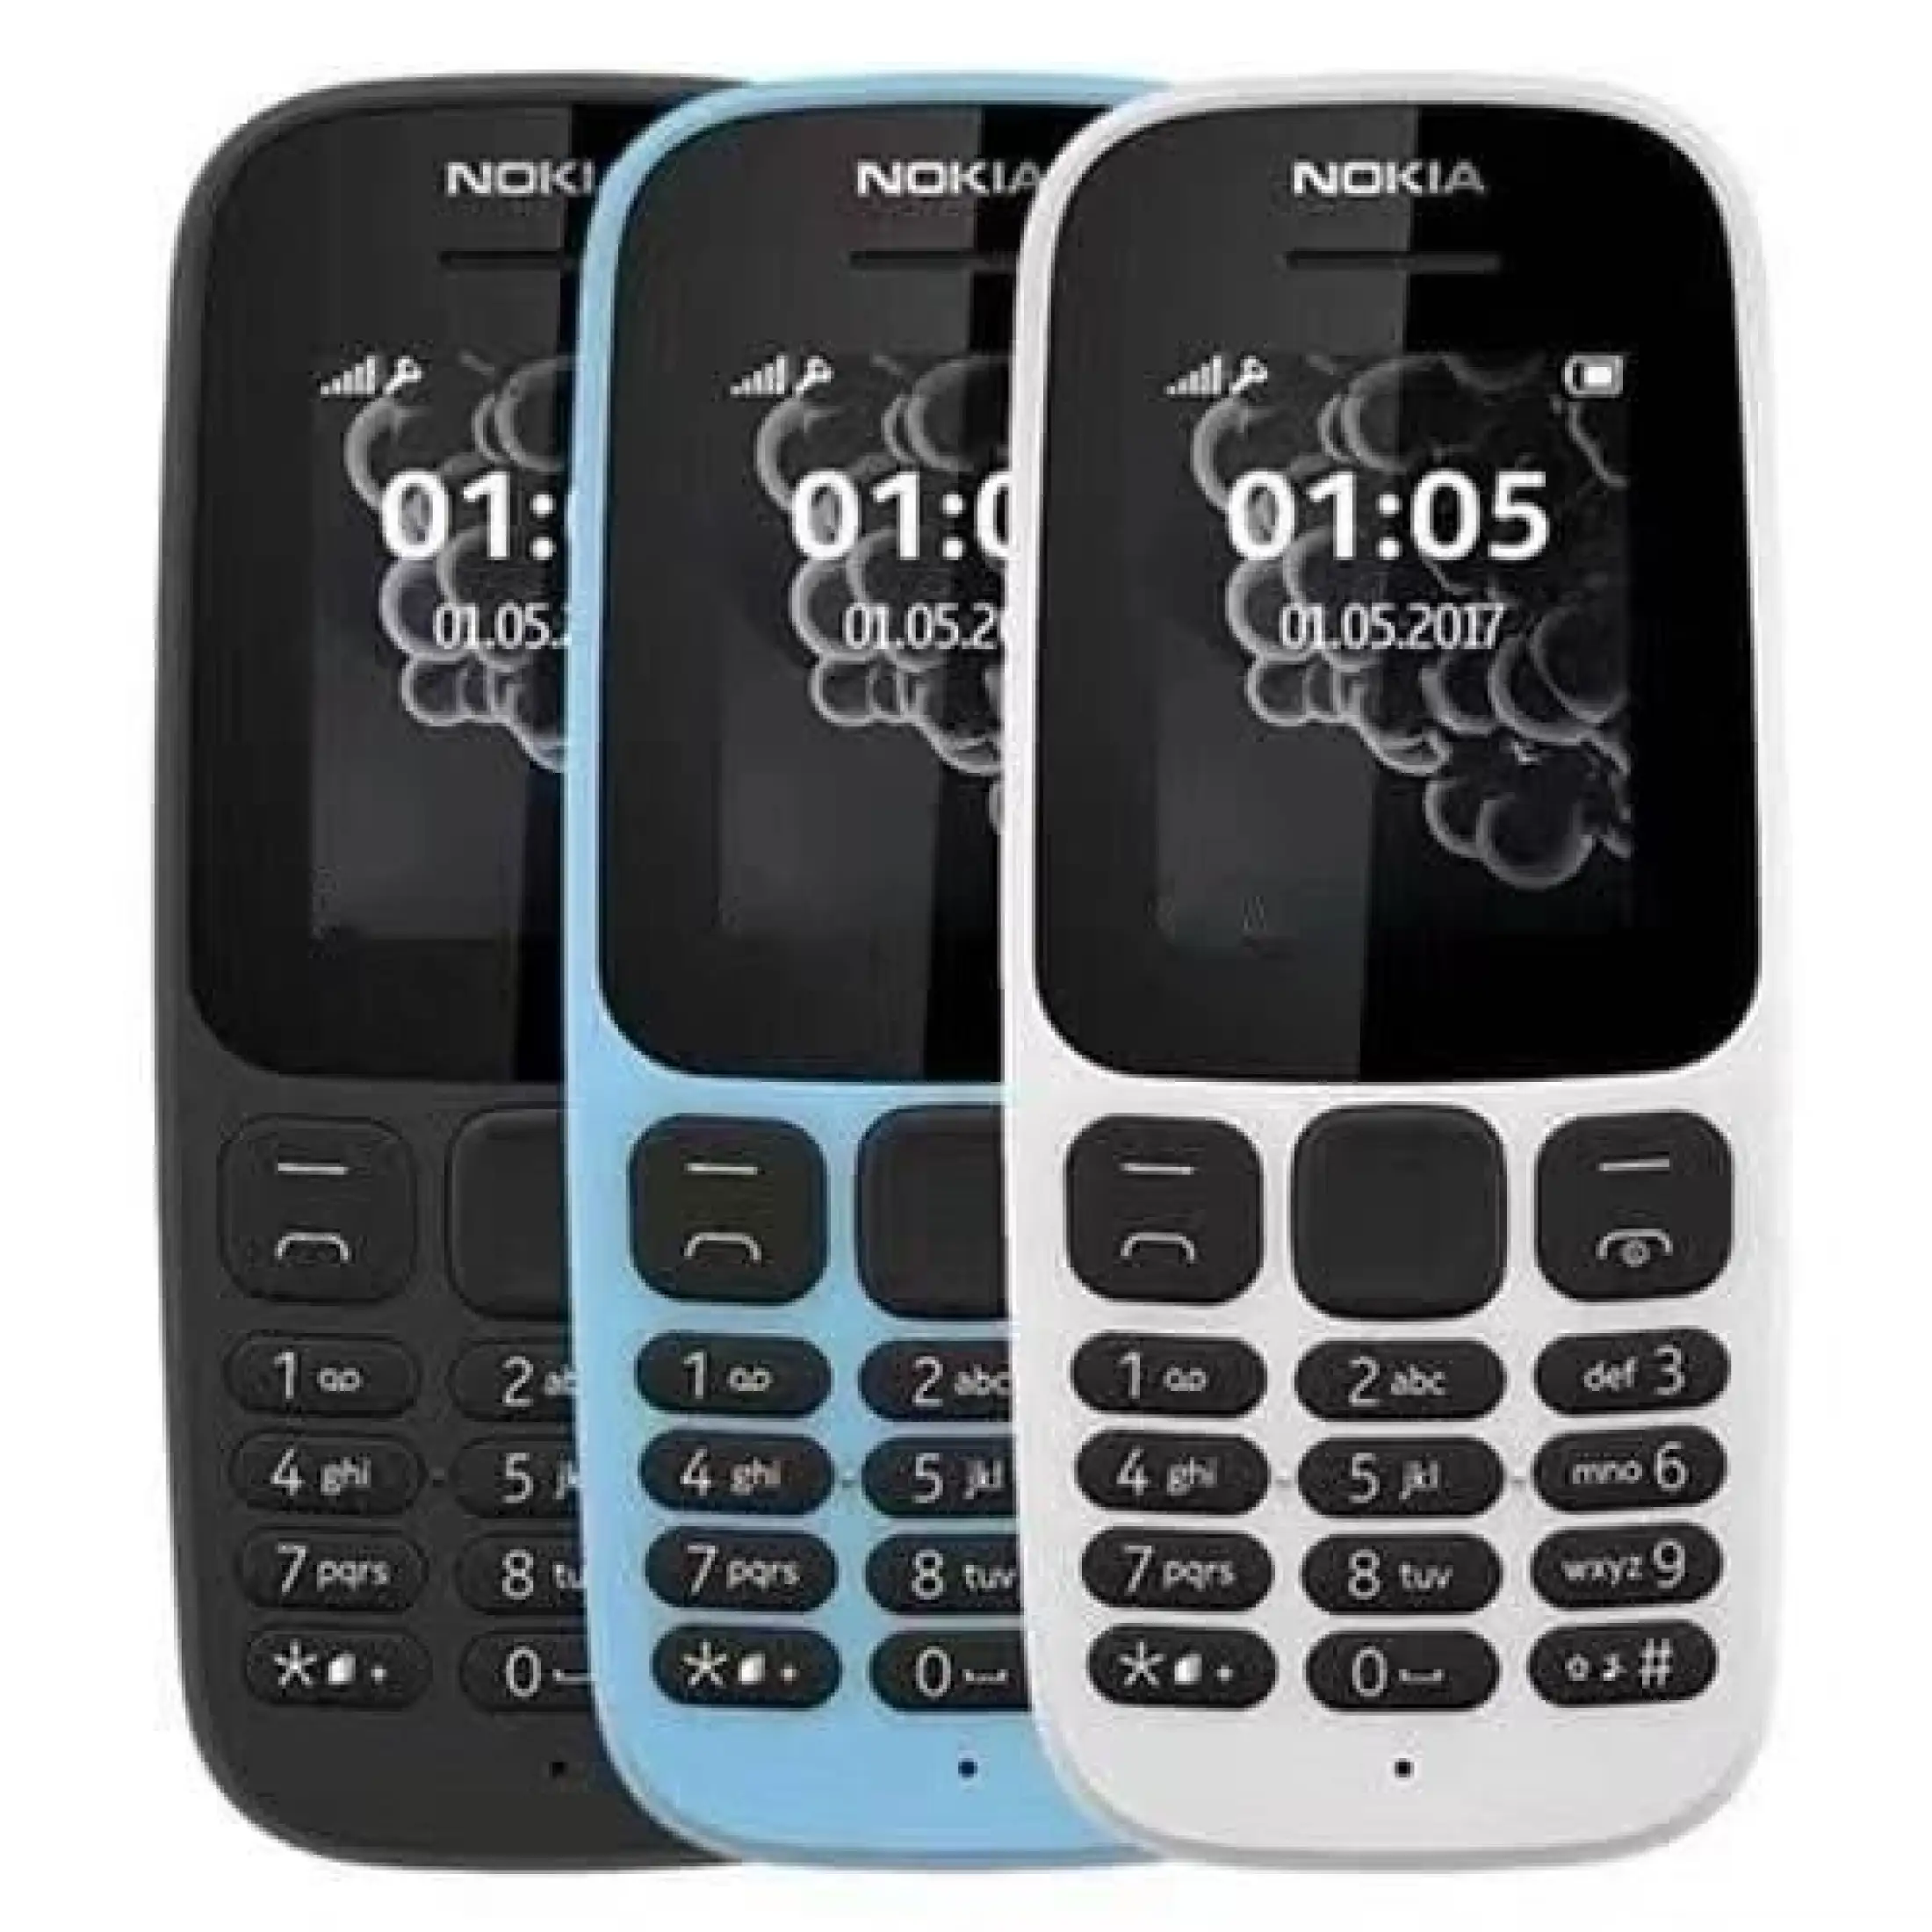 Handphone Nokia 105 Jadul Hp Nokia 105 Lazada Indonesia